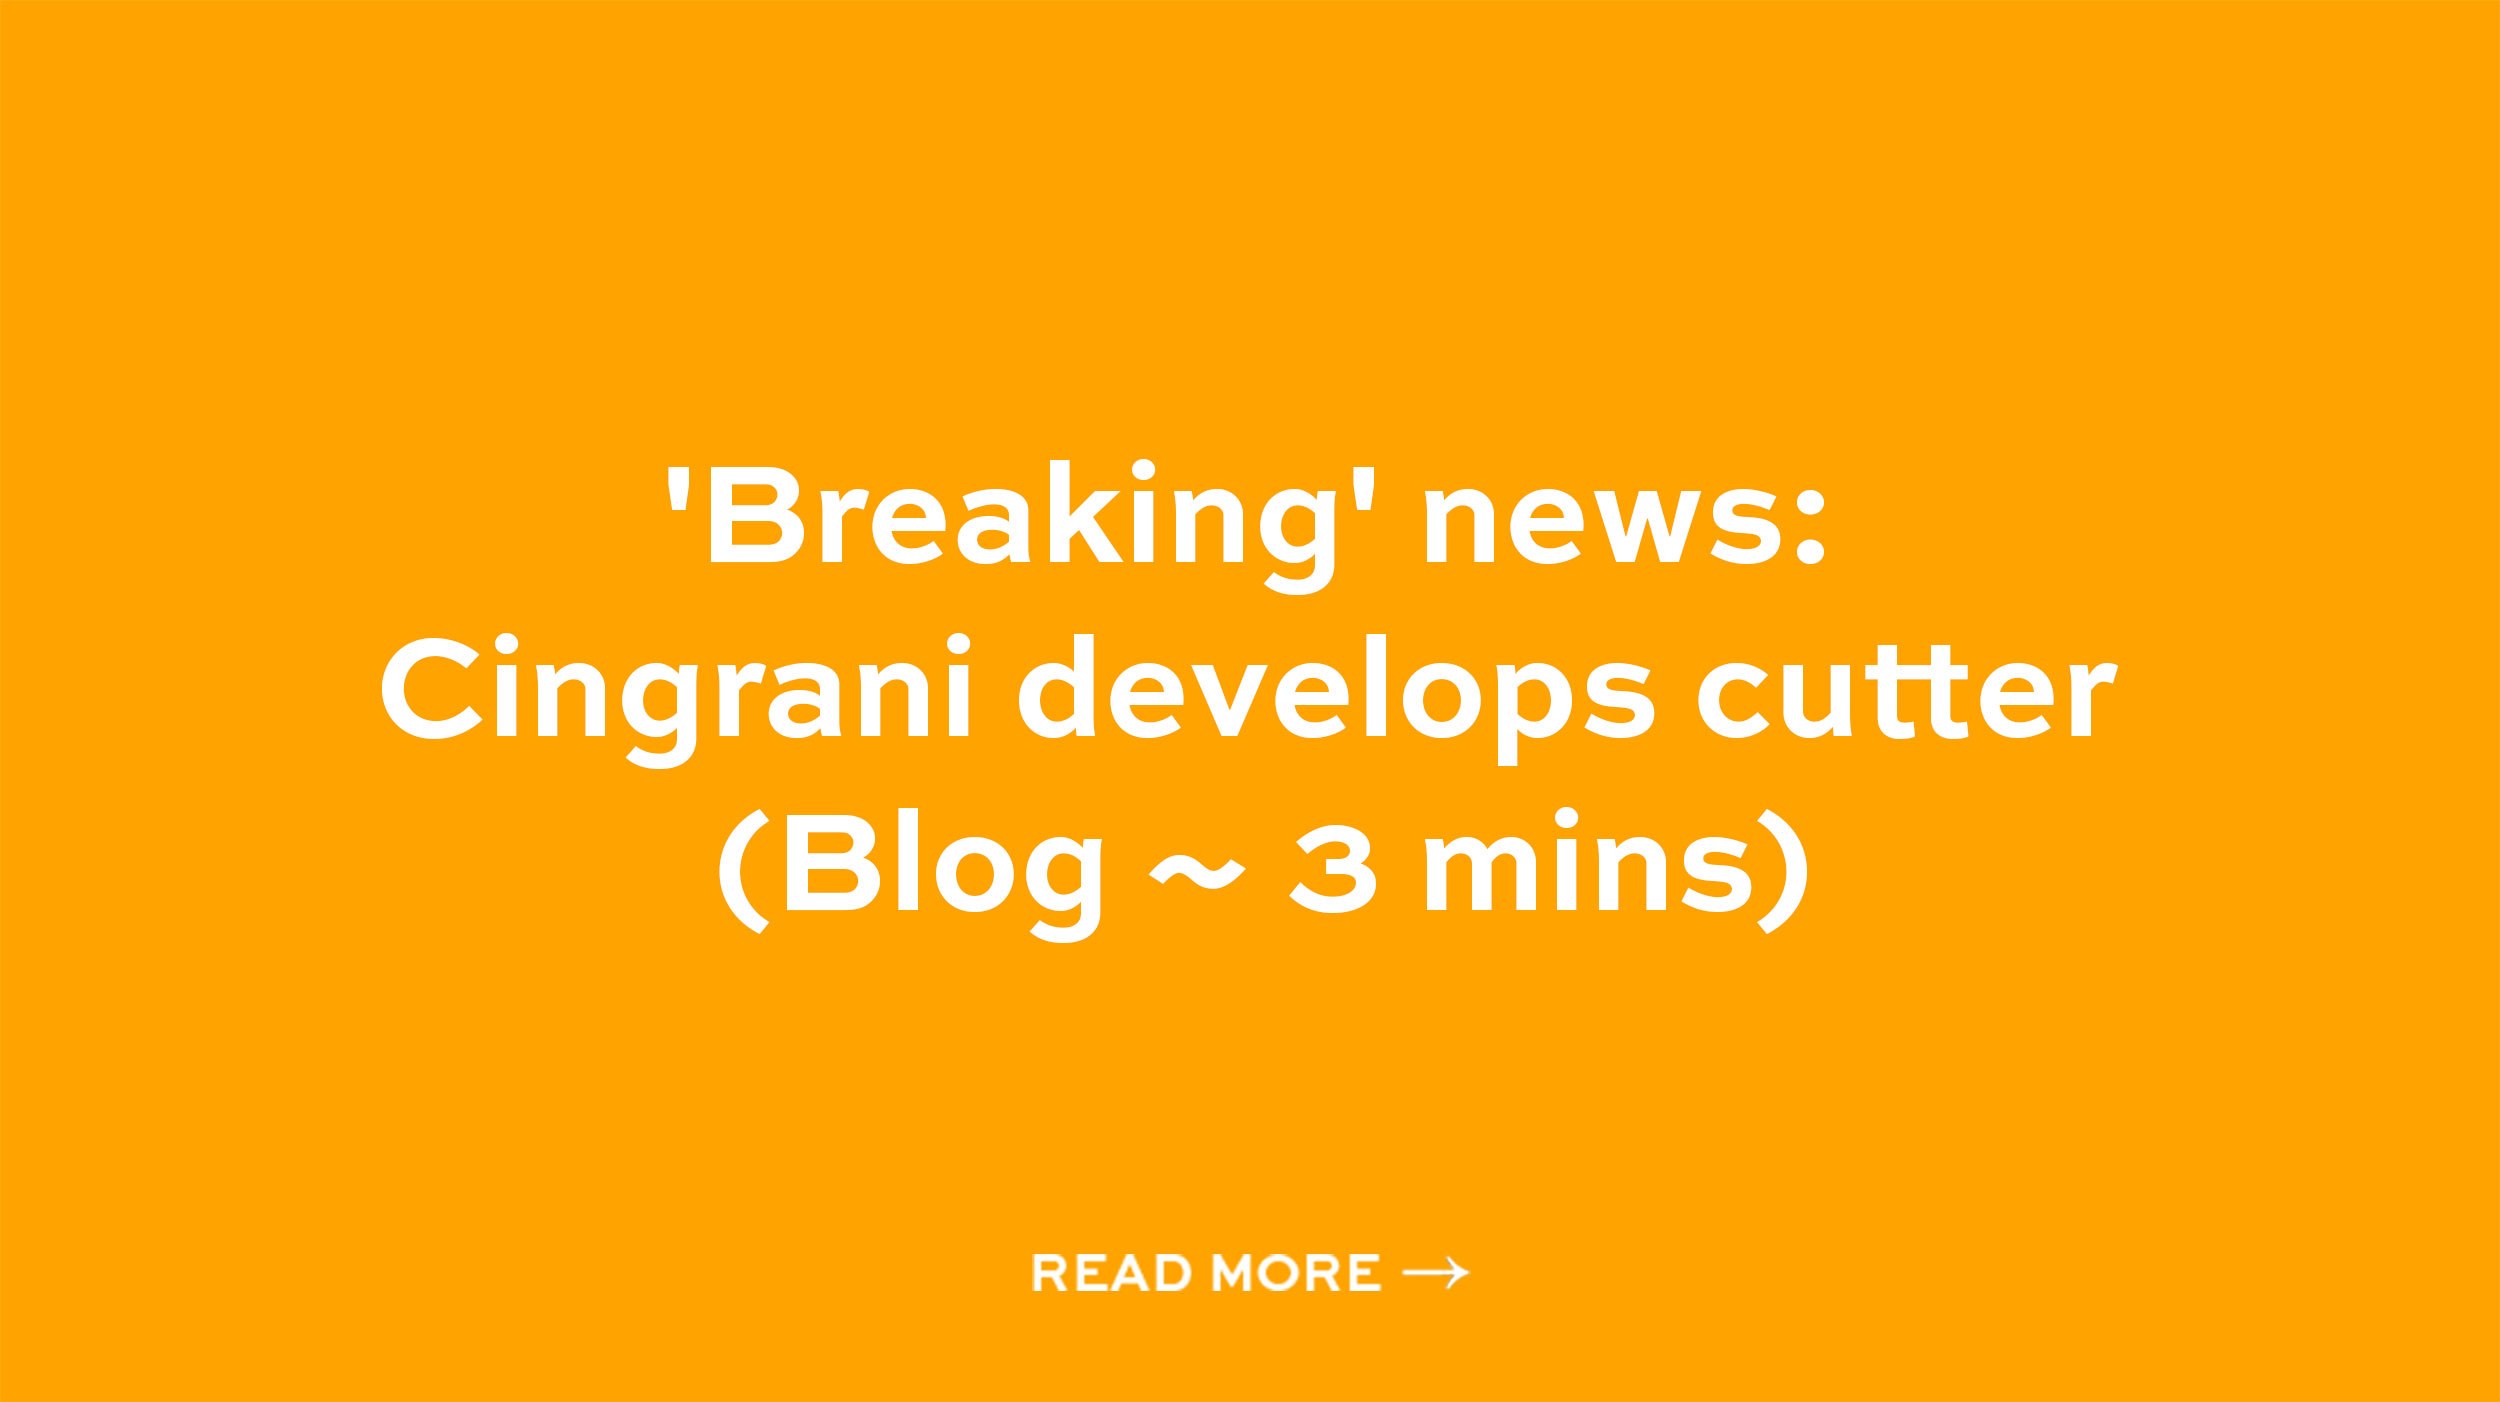 'Breaking' news: Cingrani develops cutter (Blog ~ 3 mins)